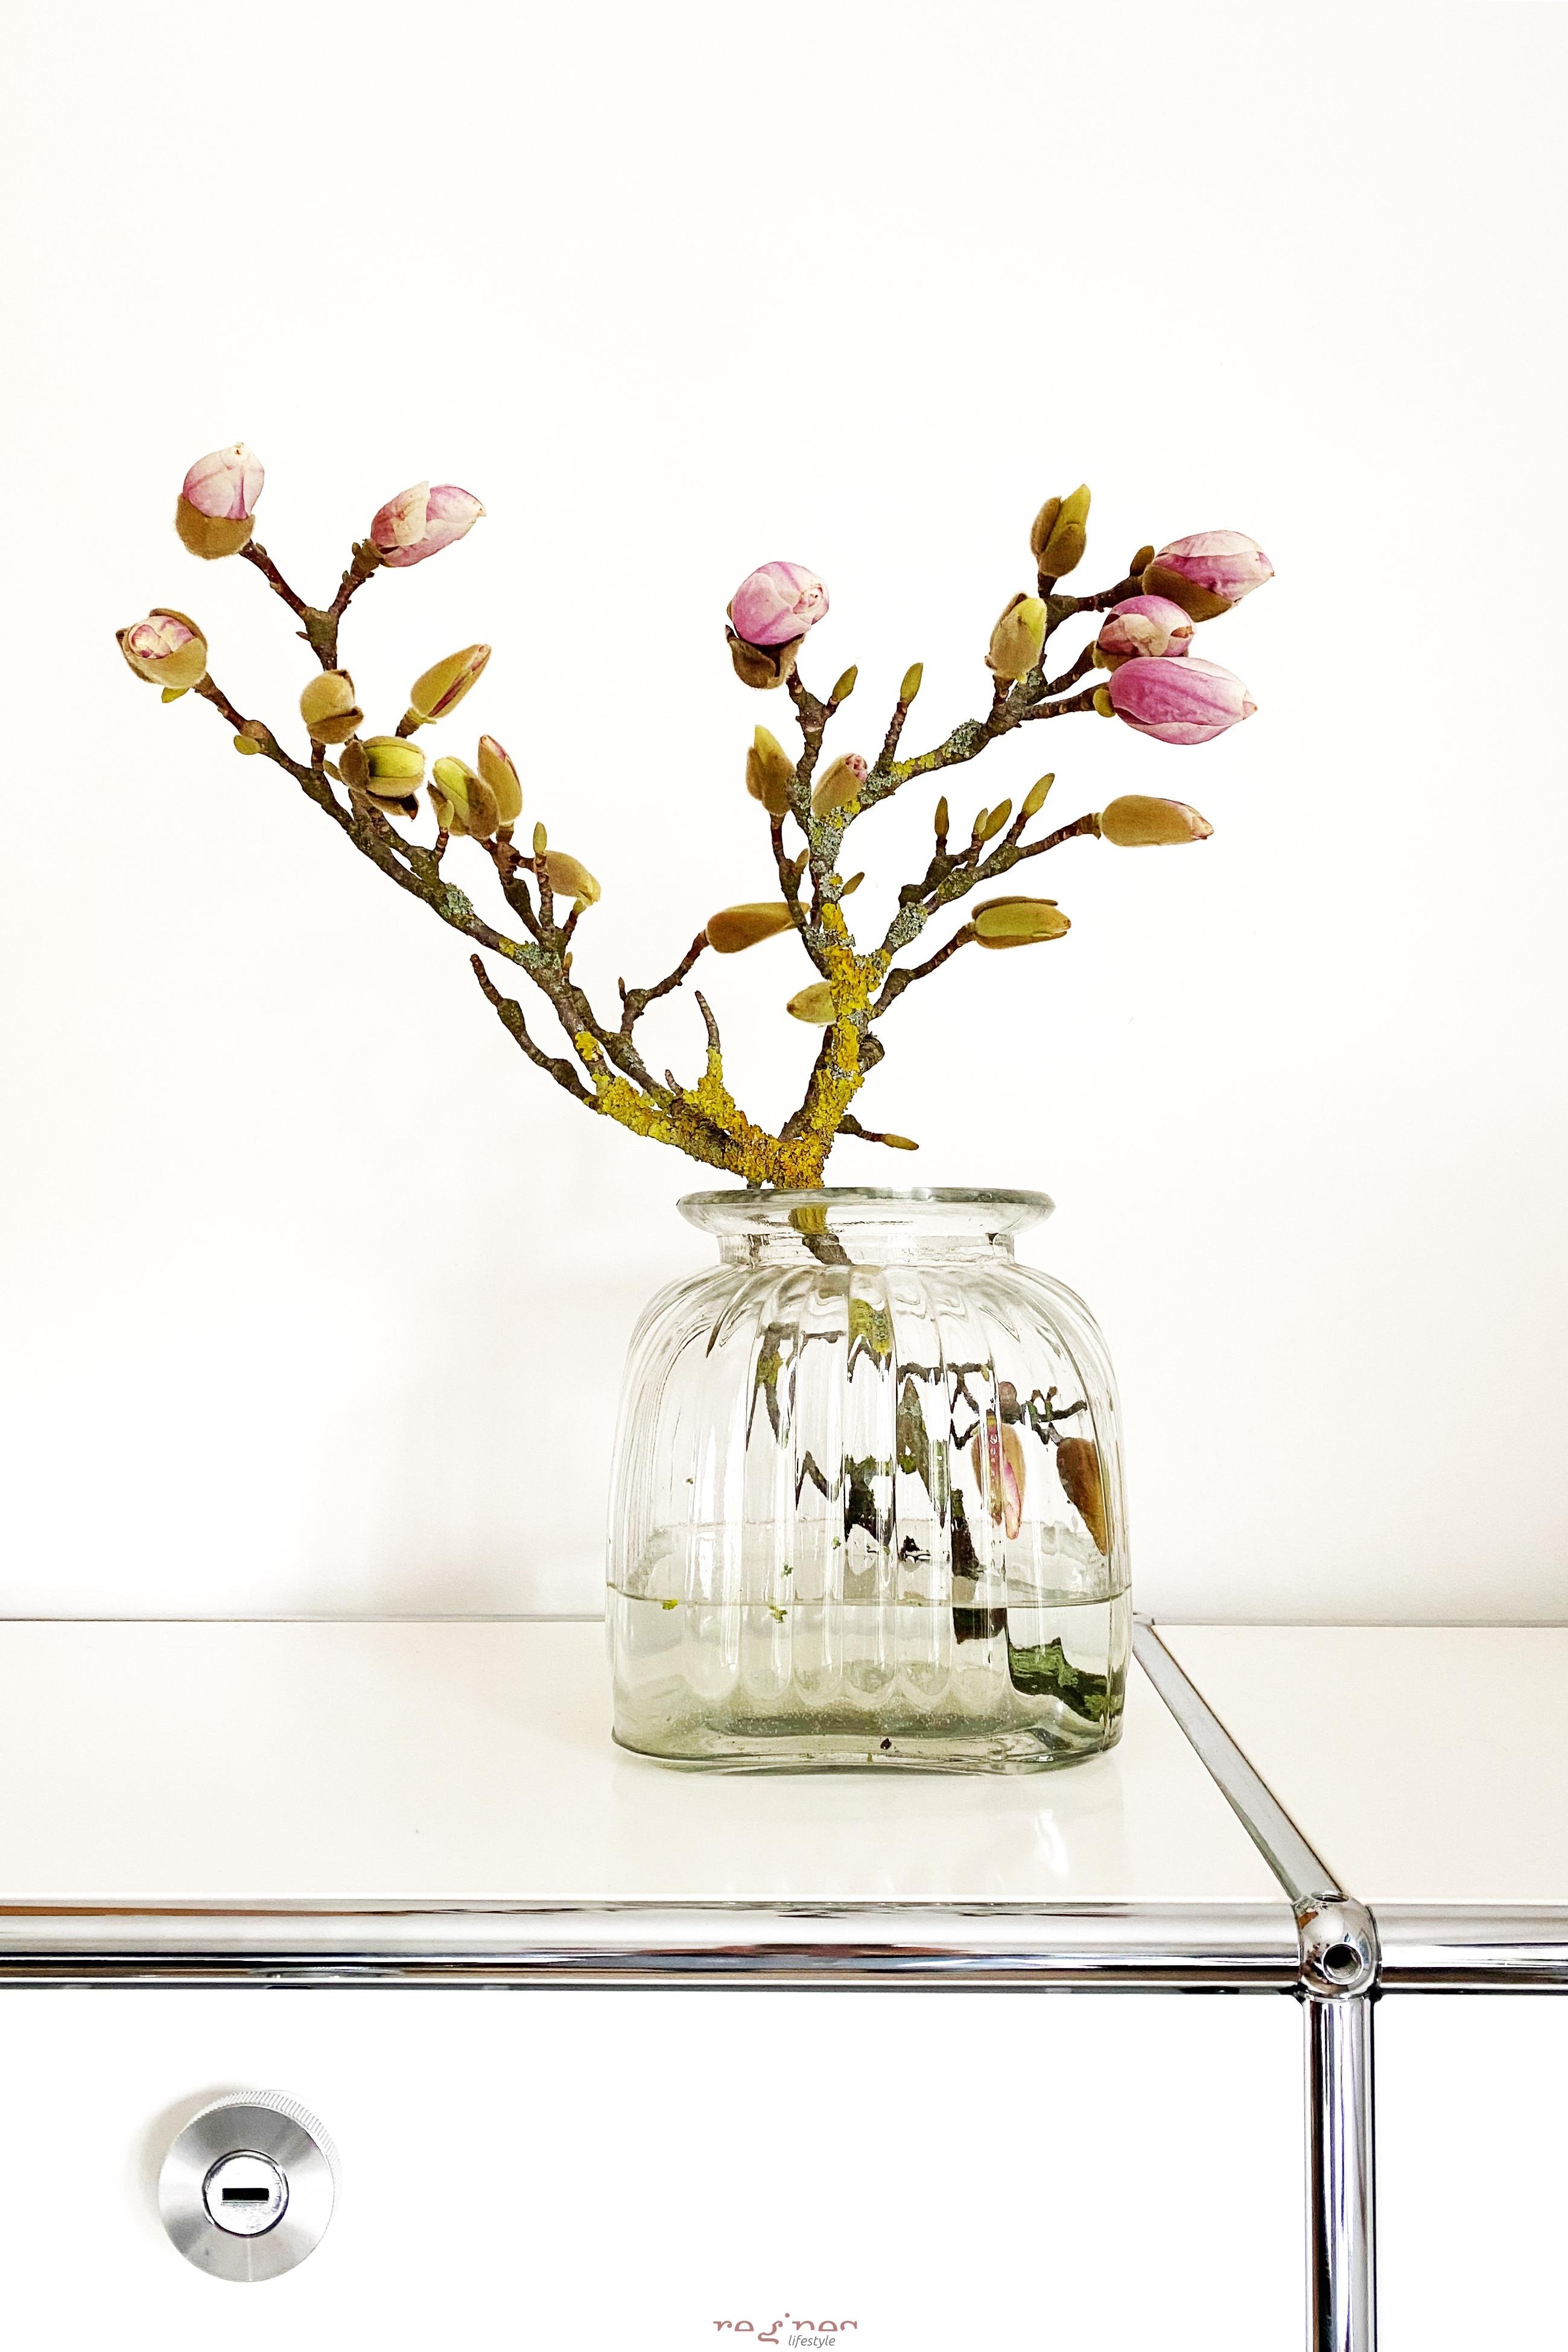 Magnolienliebe
#cosyhome #skandistyle #dekoliebe #easyinterieur #simpledecor #magnolie #magnolia #blumen